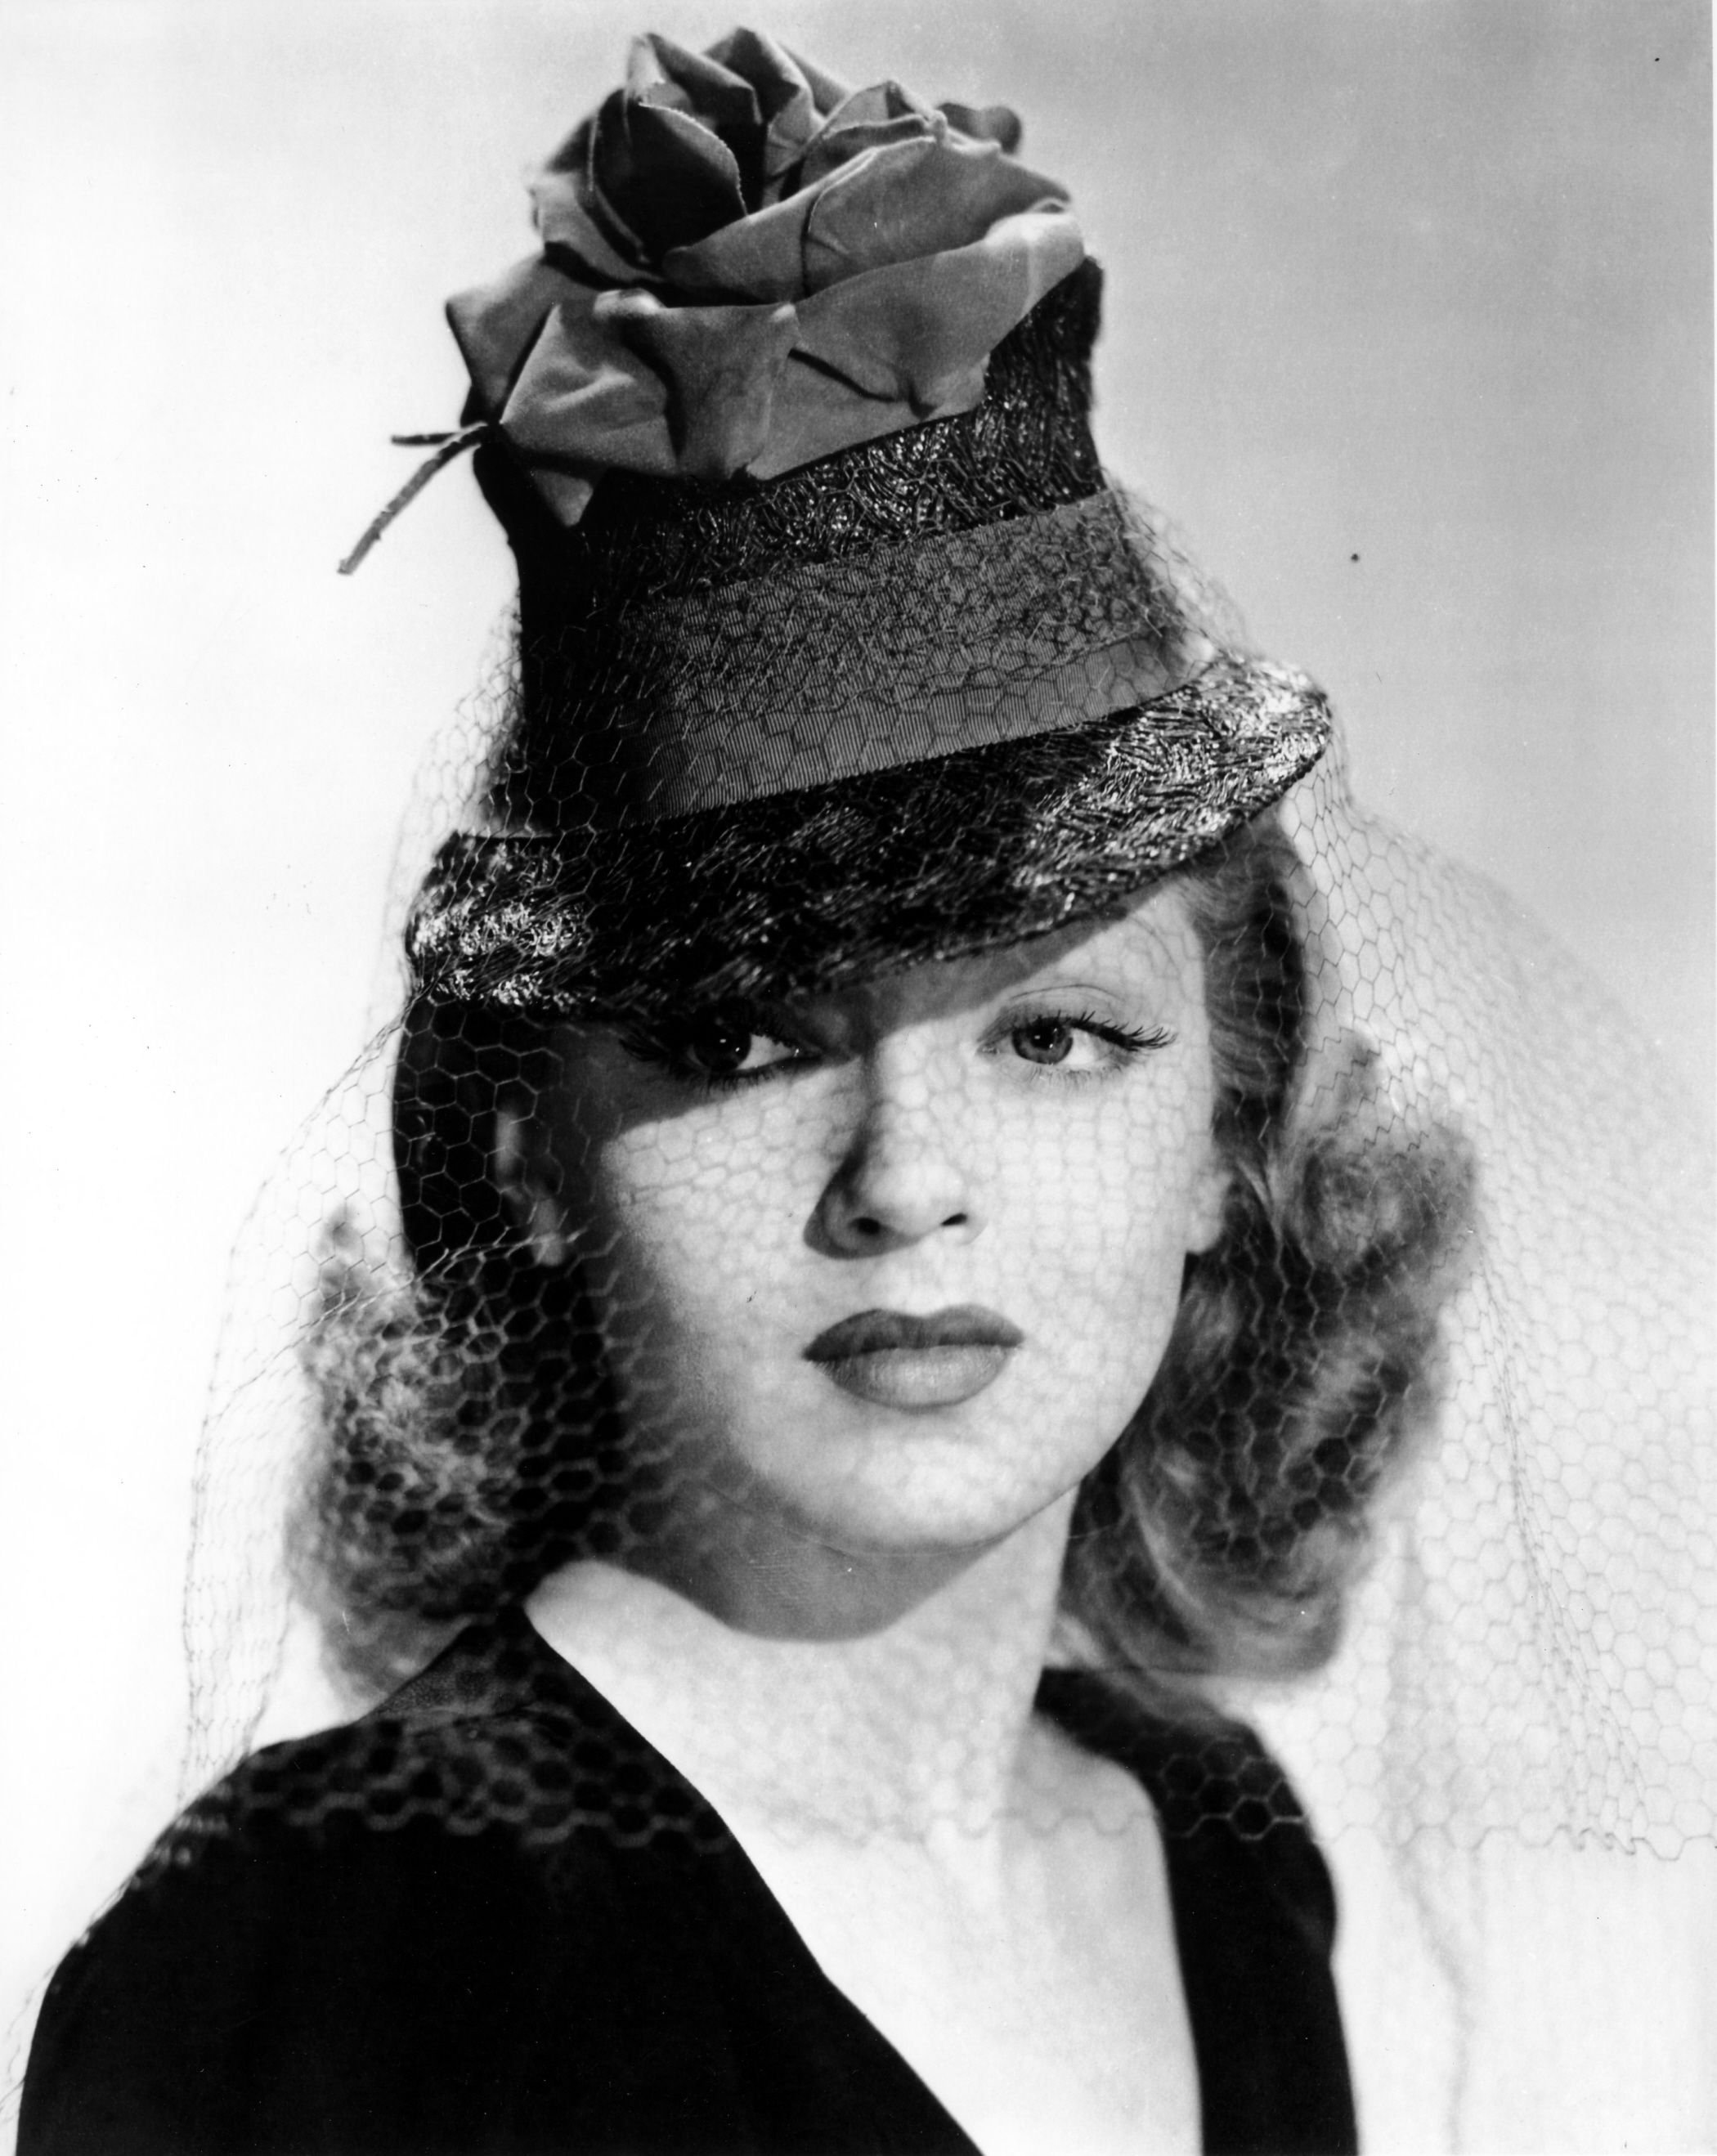 Hat 30. Шляпки мода 30х. Шляпки 1940х Америка голливудские. Мода шляпок Германия 40е.